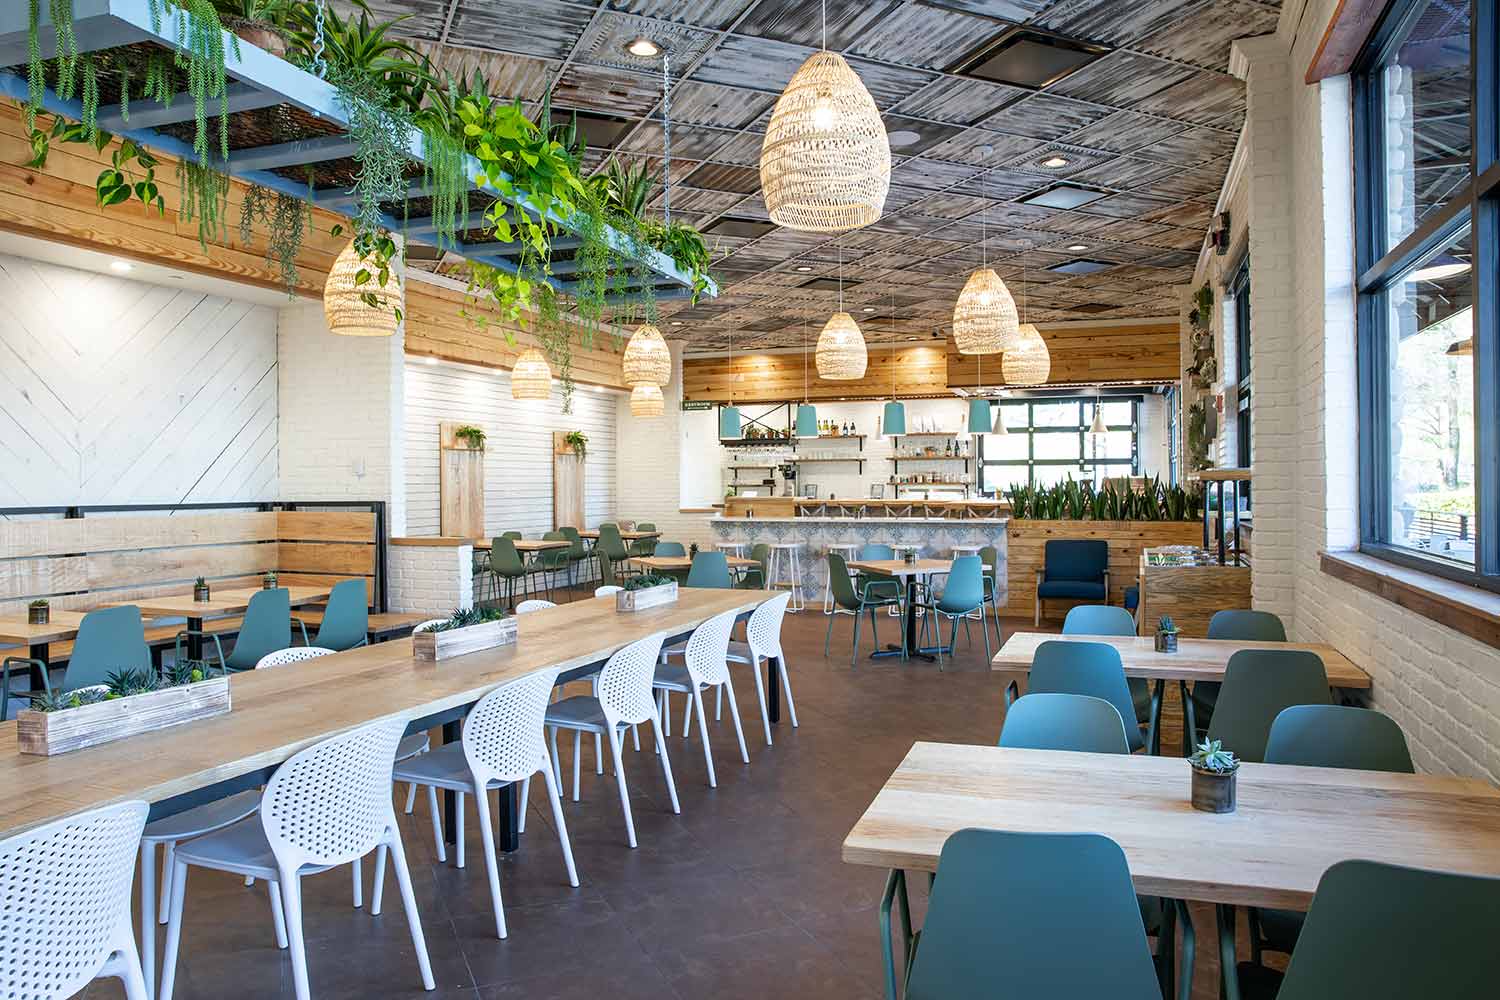 City Silo. Comforting and simple restaurant interior design.